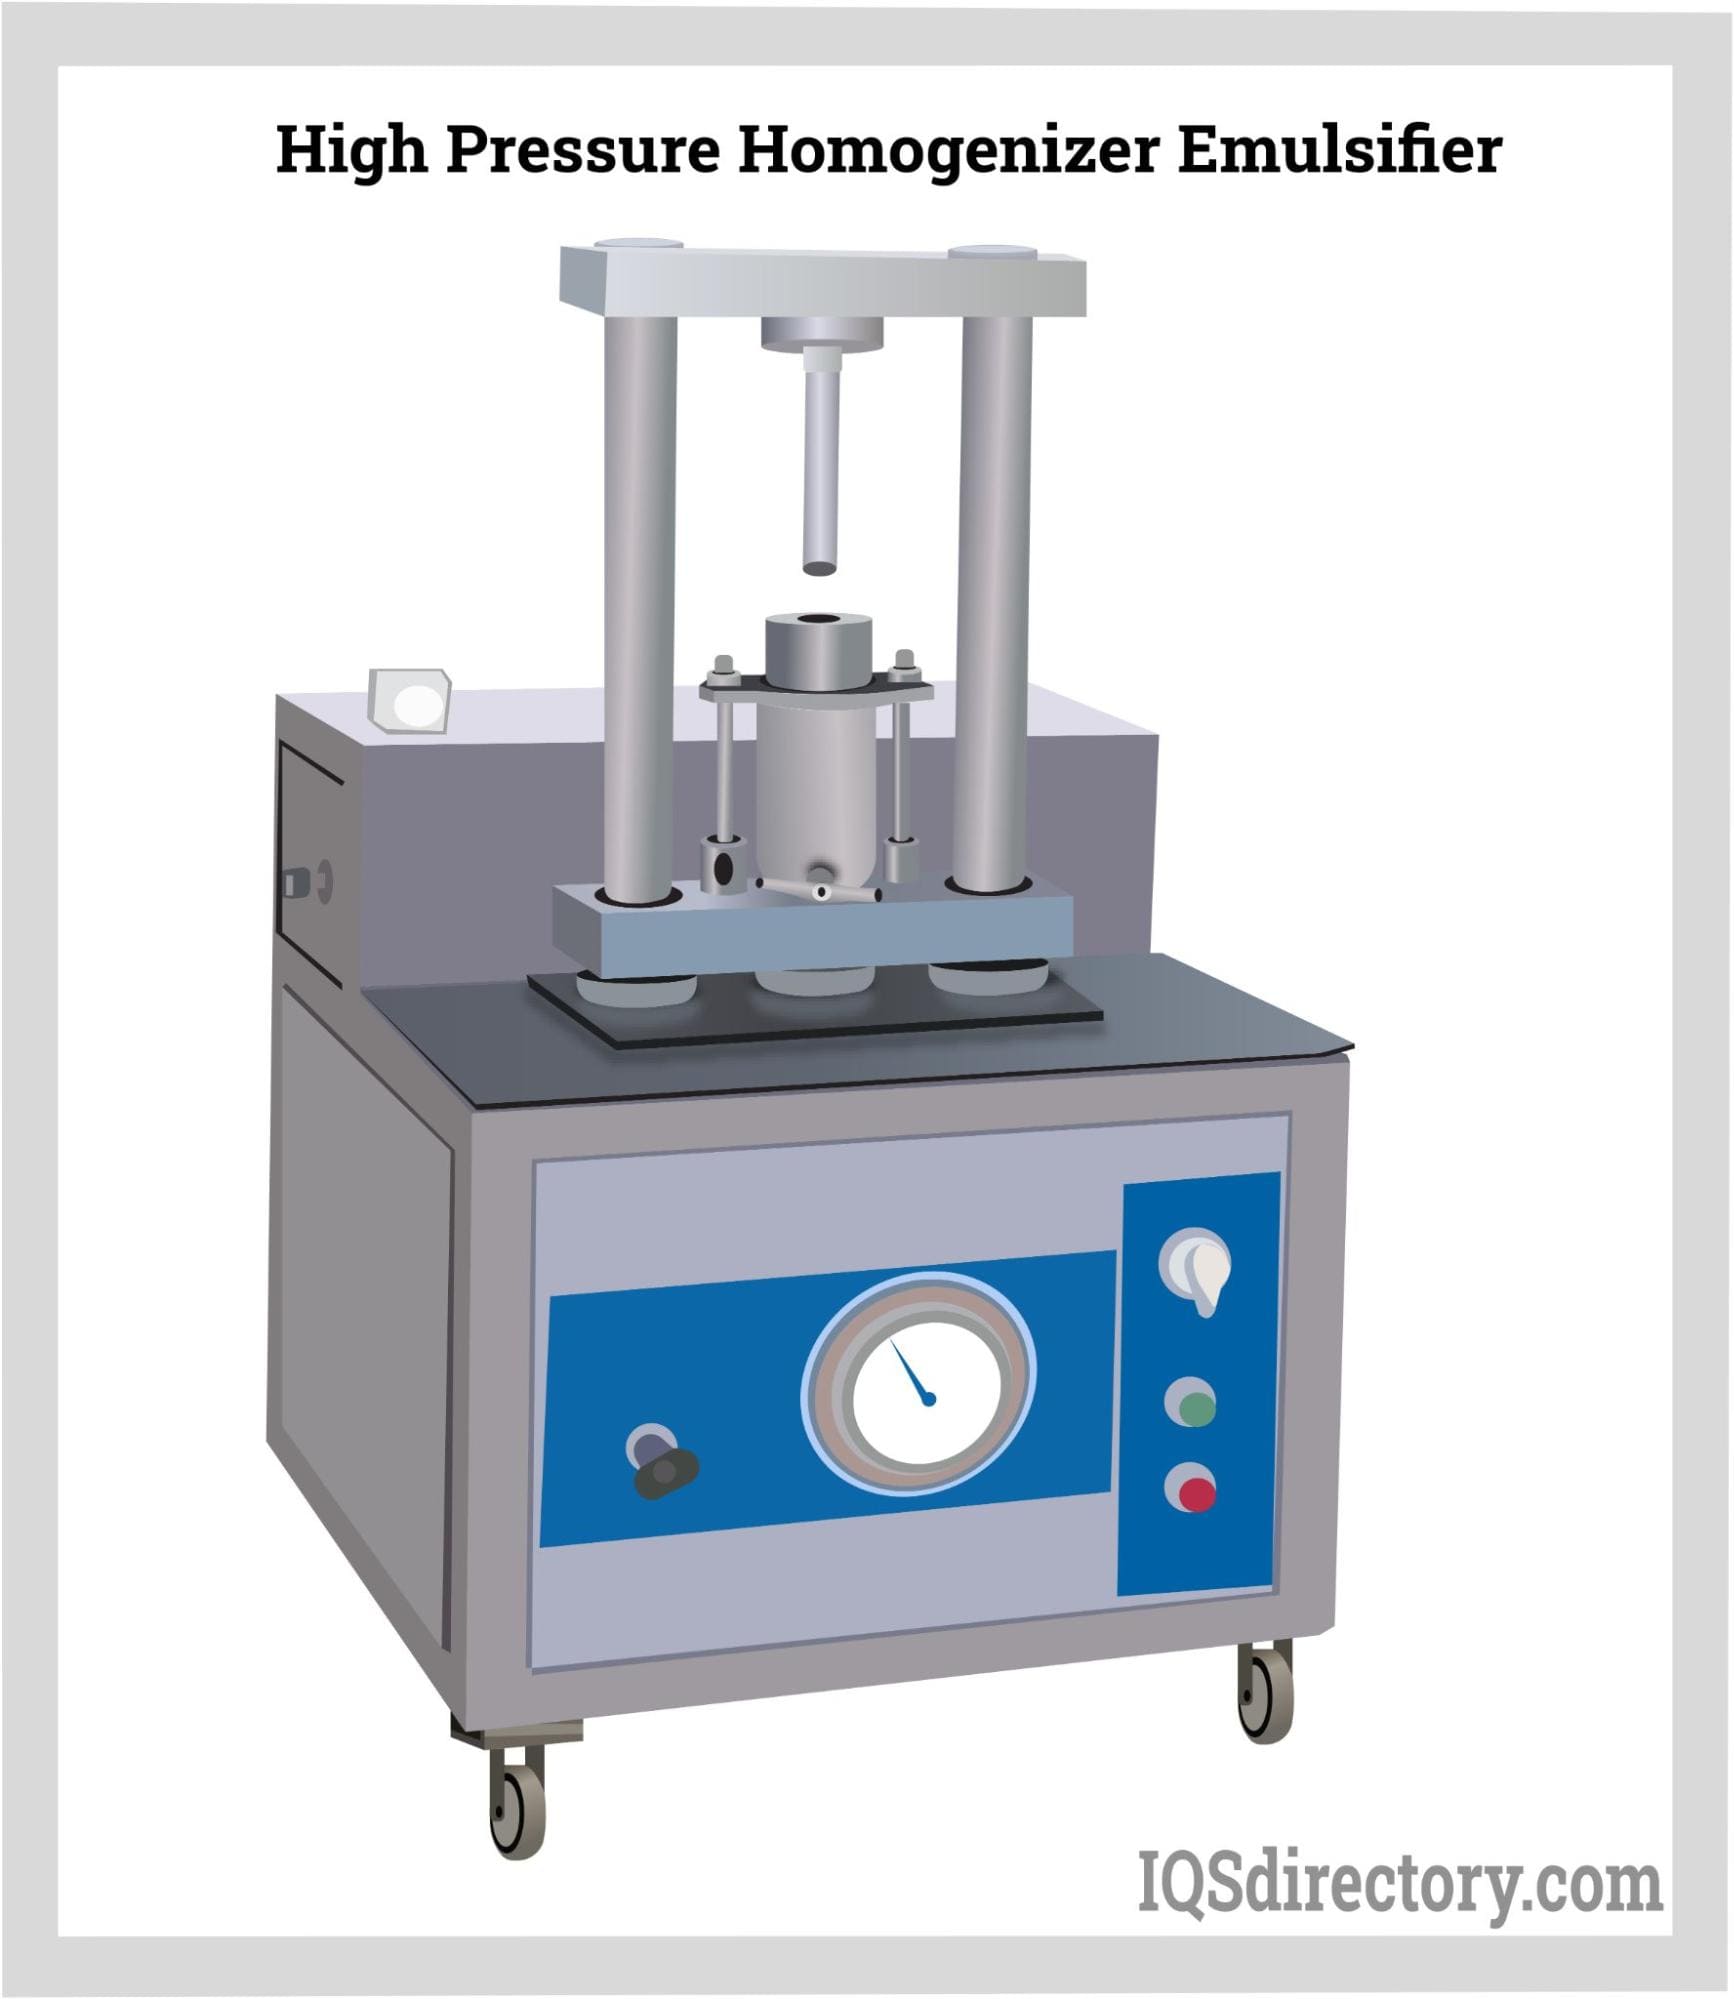 High Pressure Homogenizer Emulsifier